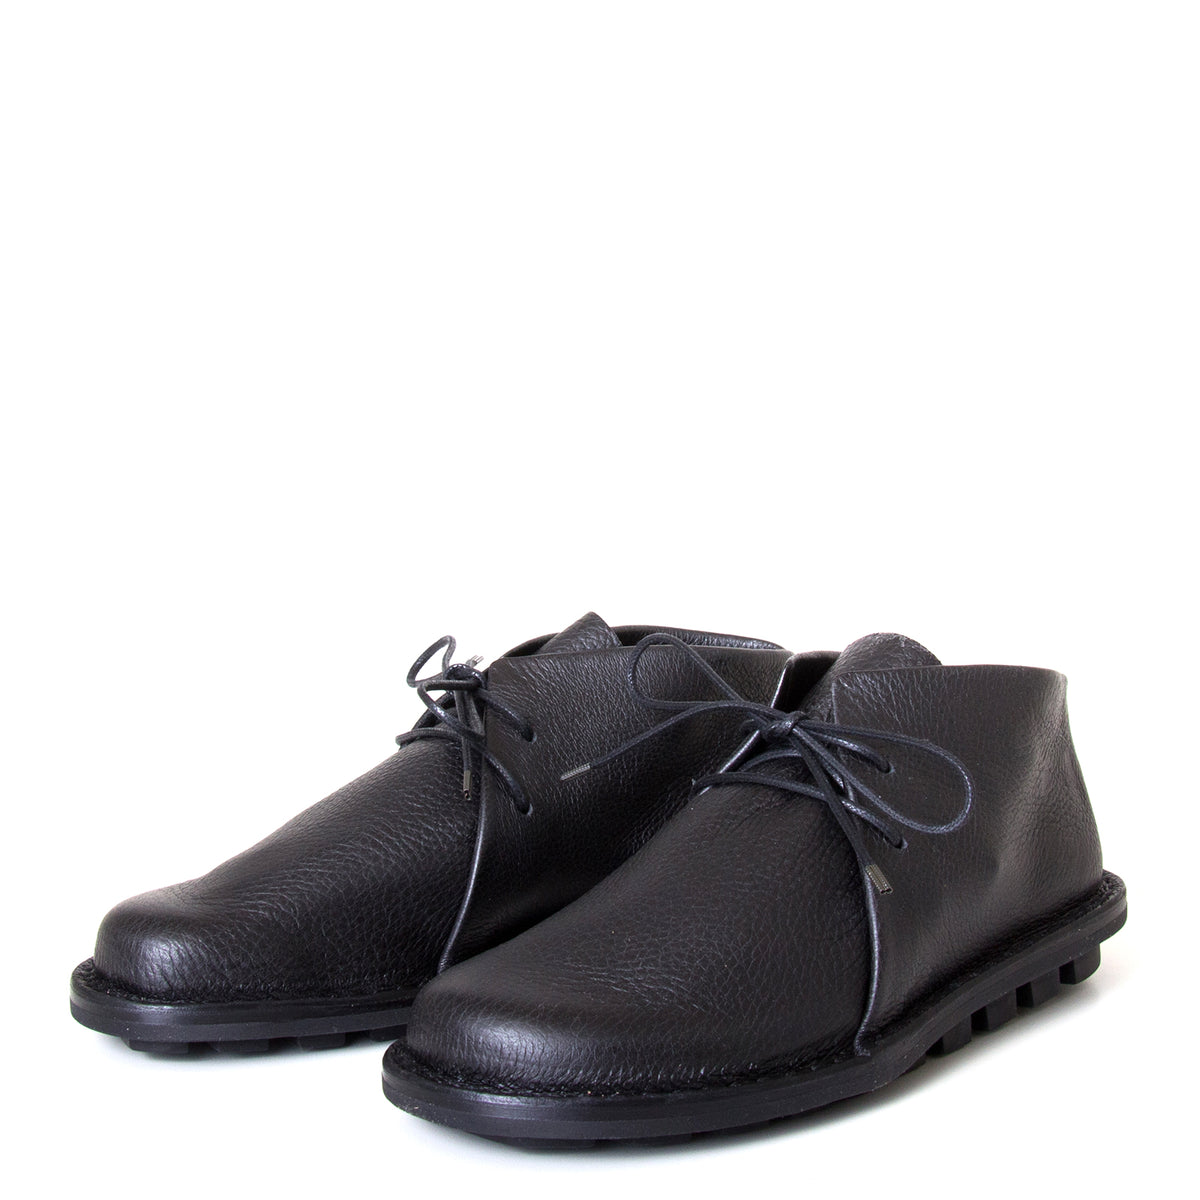 Trippen Again. Women's laced shoes Black leather upper, flexible sole ...